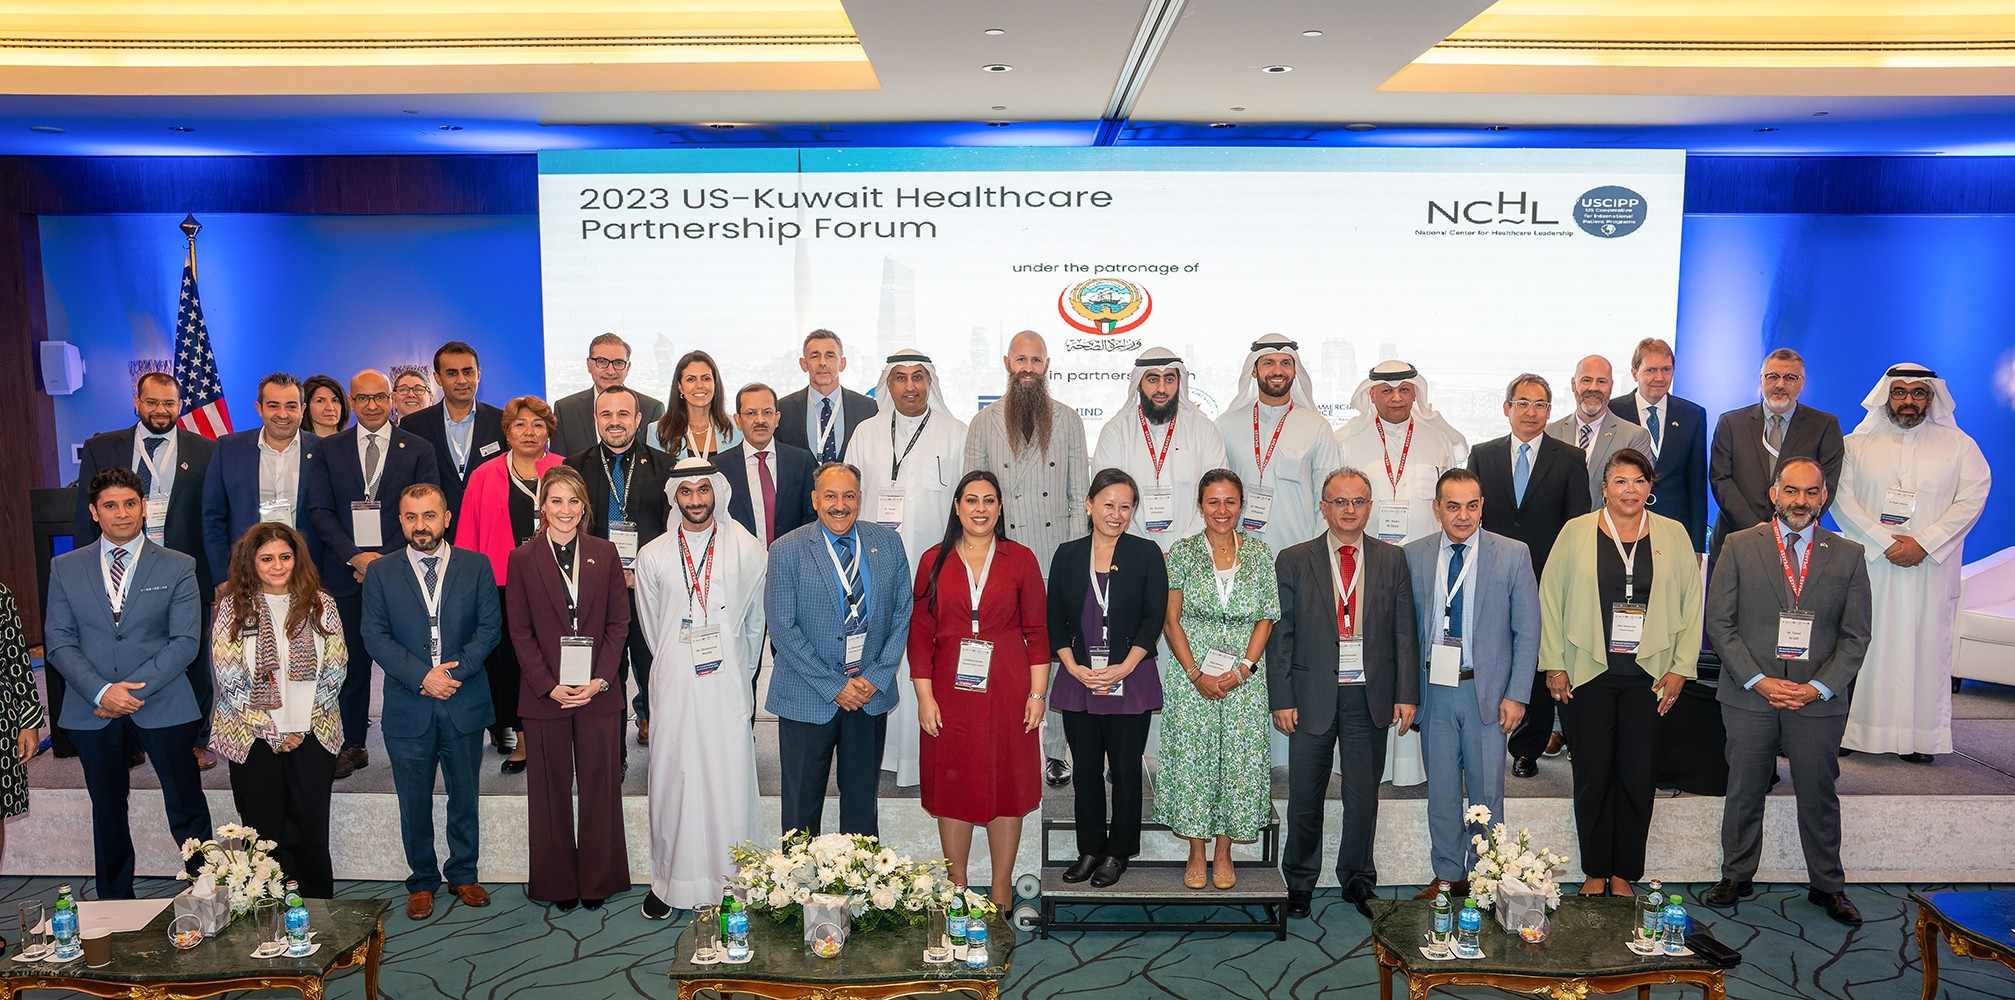 health,us,kuwait,technology,medical